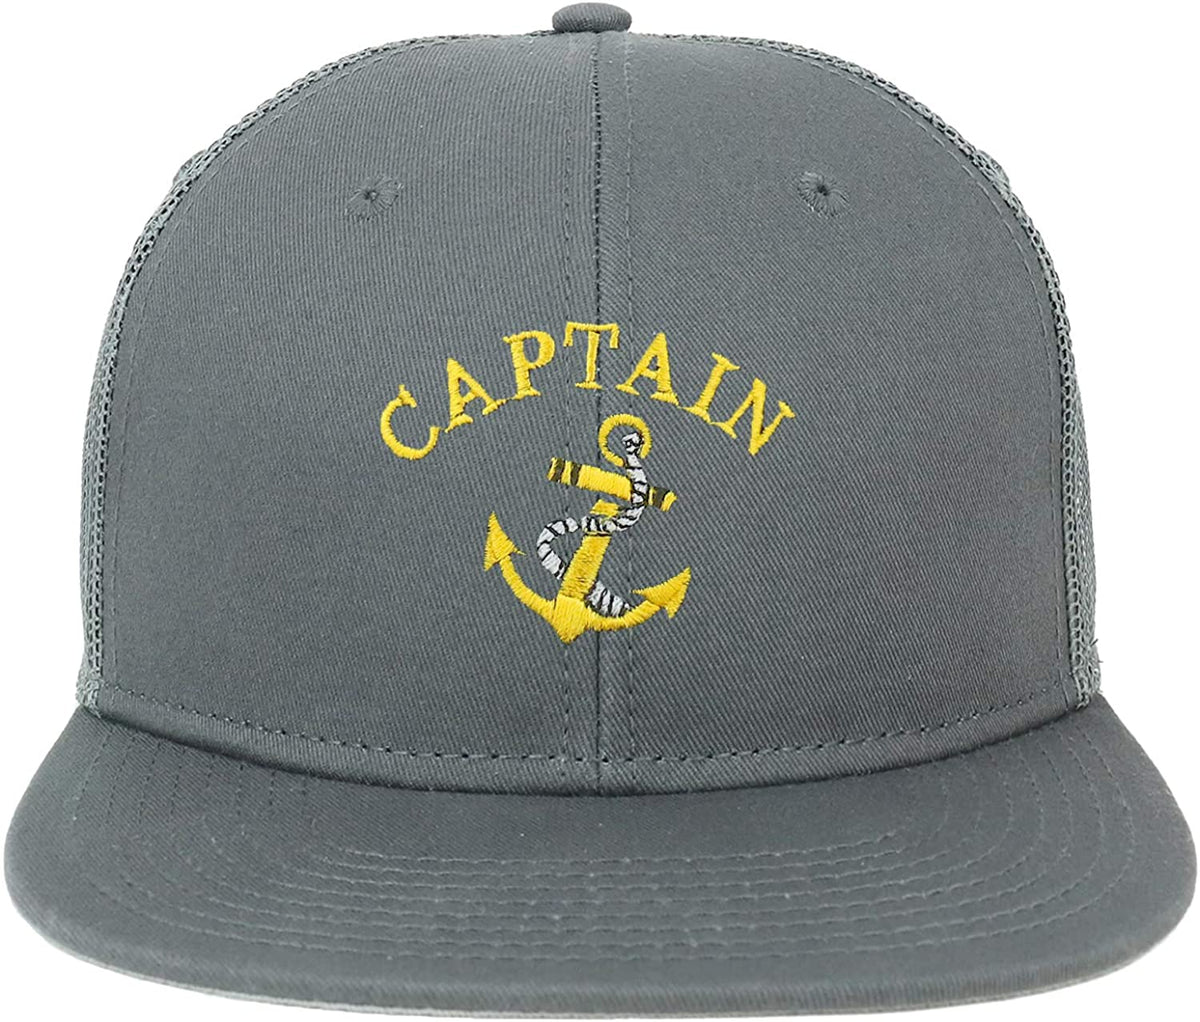 Armycrew Oversize XXL Captain Anchor Logo Embroidered Flatbill Mesh Snapback Cap